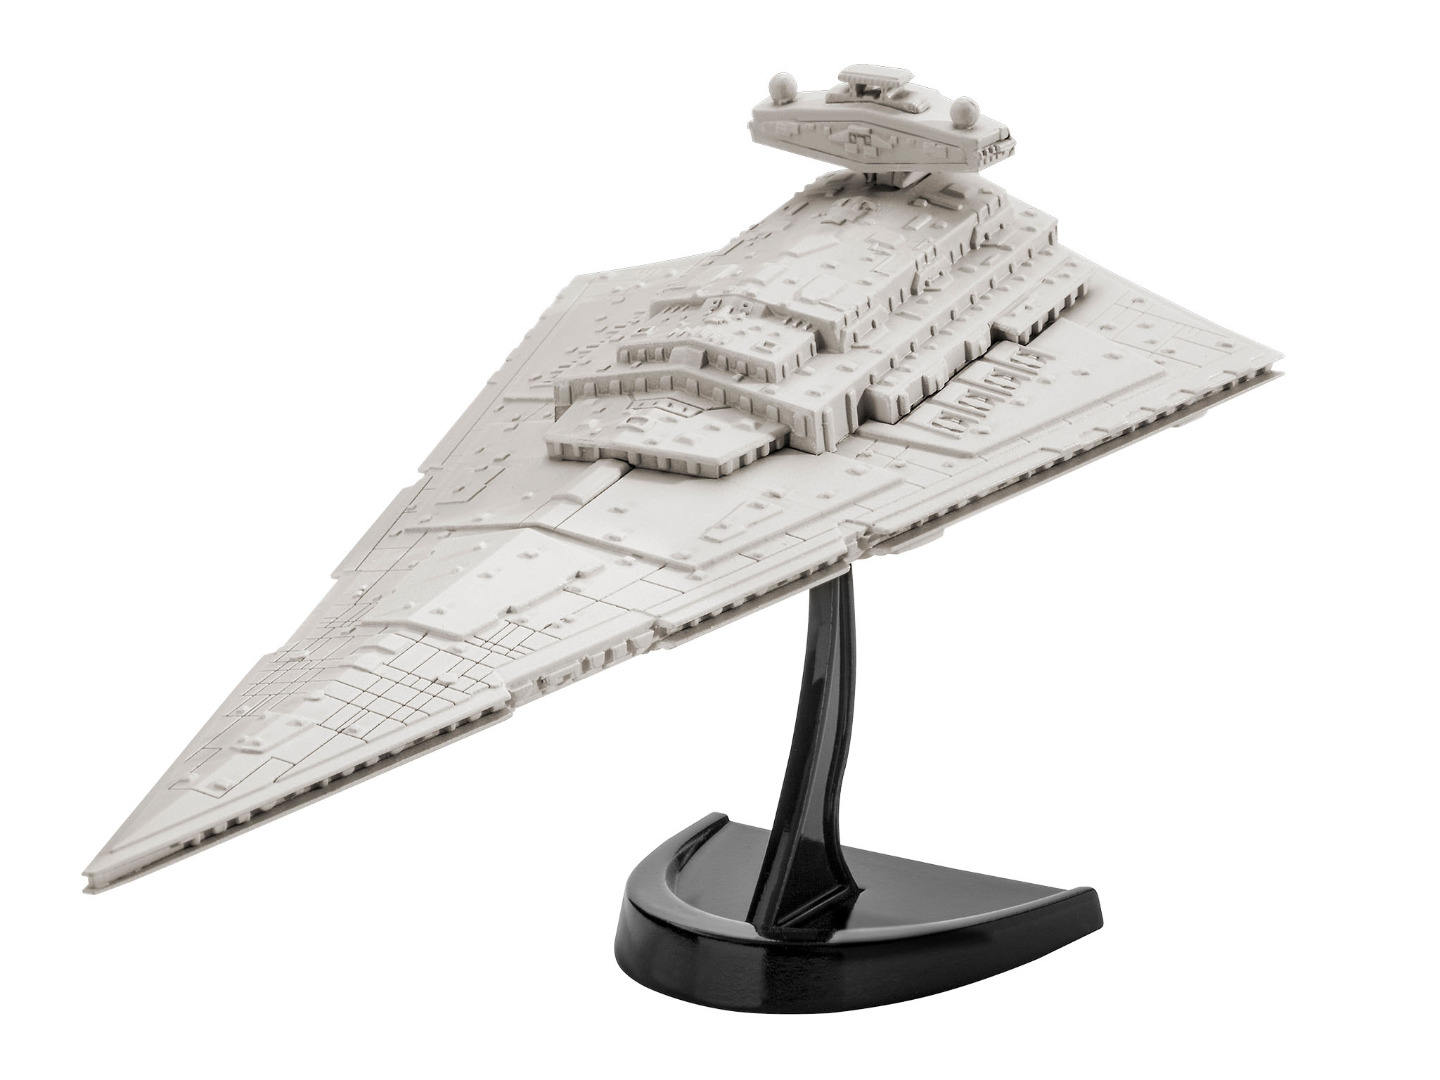 Revell Model Kit Star Wars Imperial Star Destroyer Scale: 1:12300 